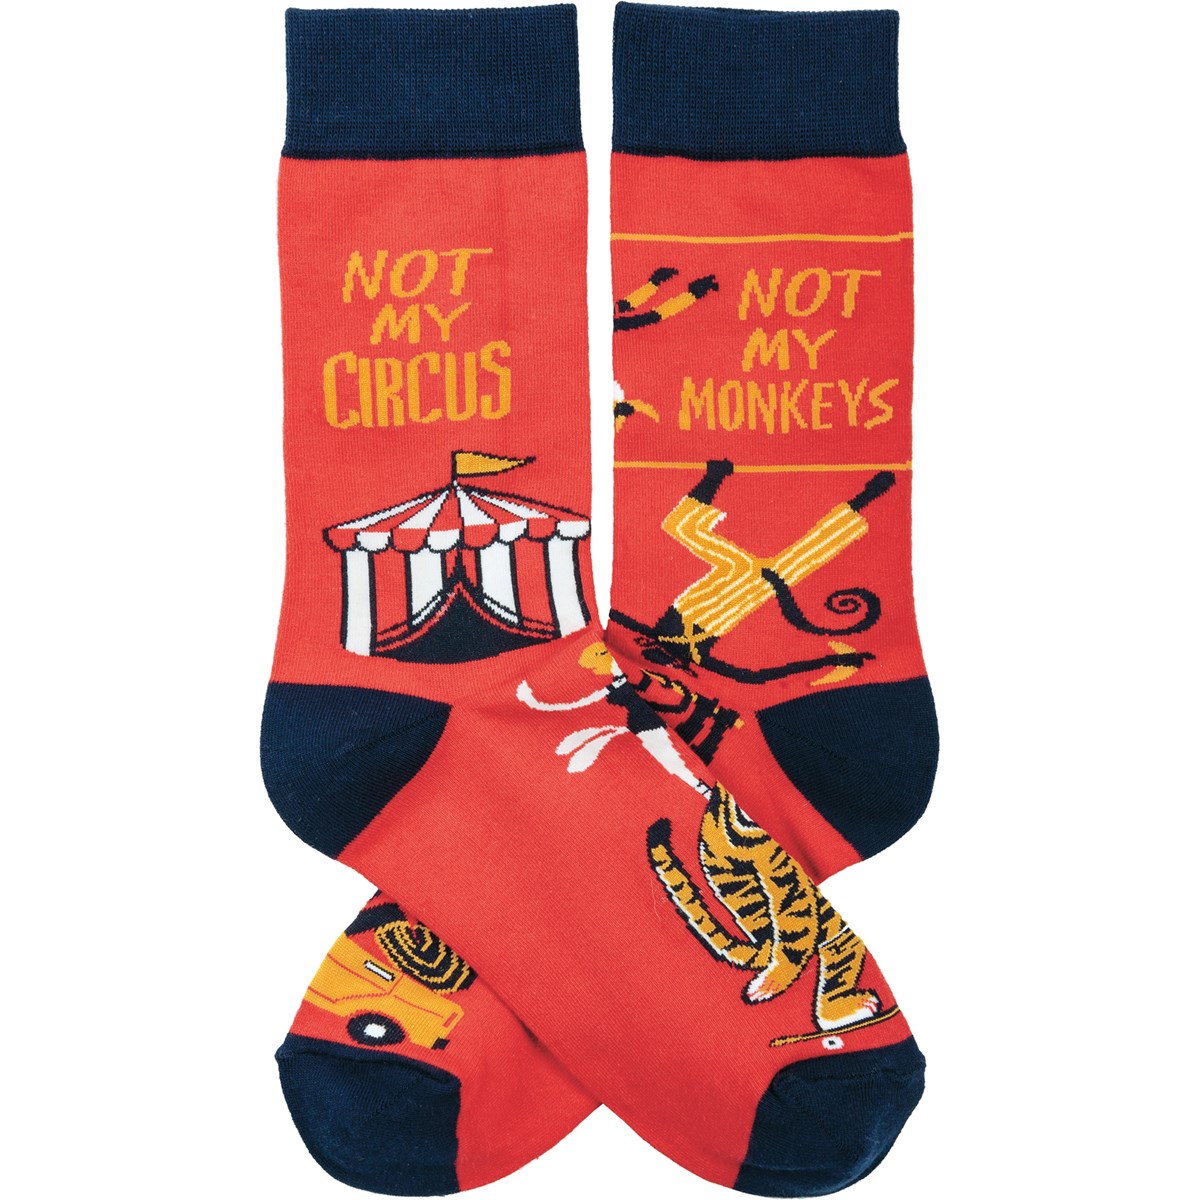 Socks - Circus & Monkeys - One Size Fits Most - Cotton, Nylon, Spandex